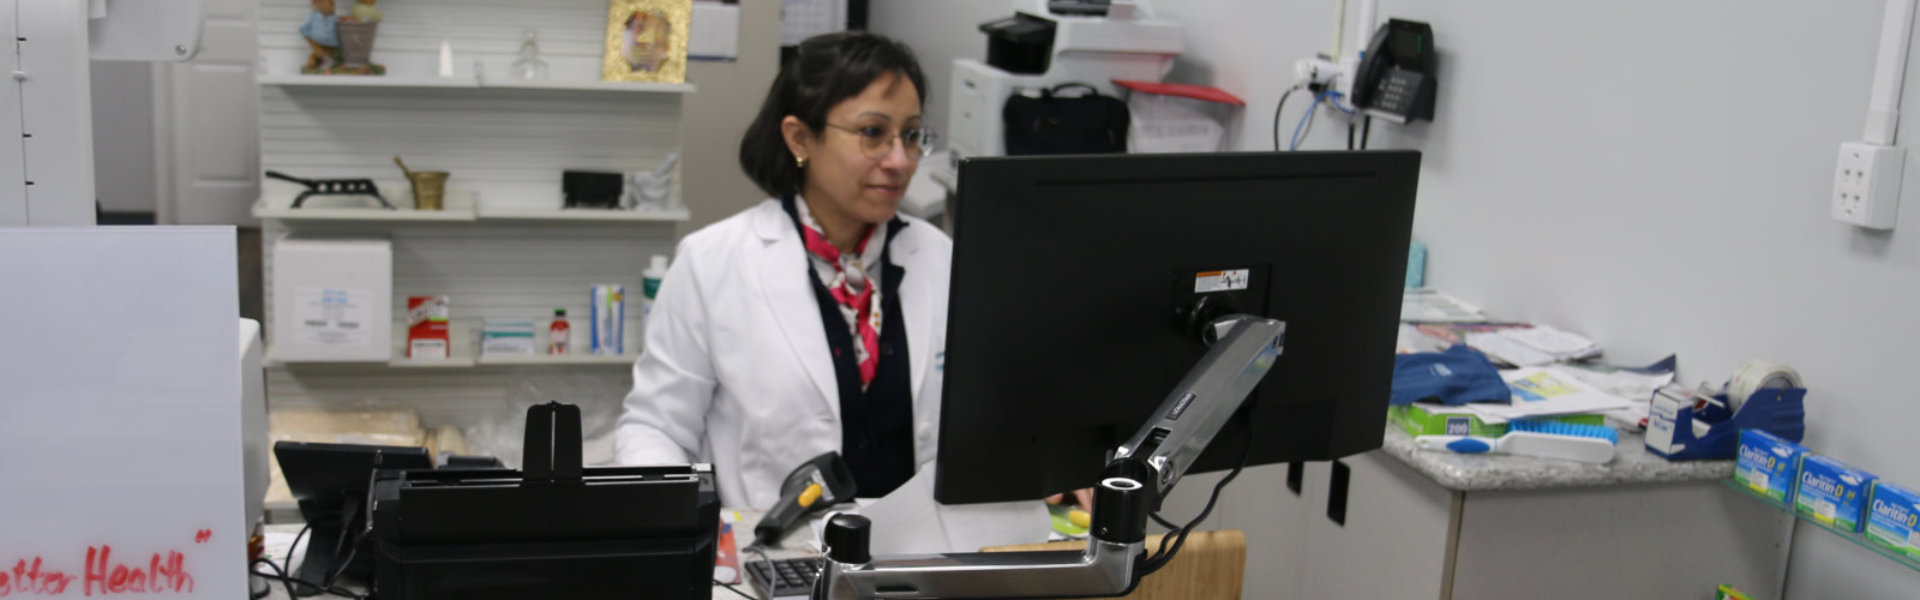 pharmacist using computer